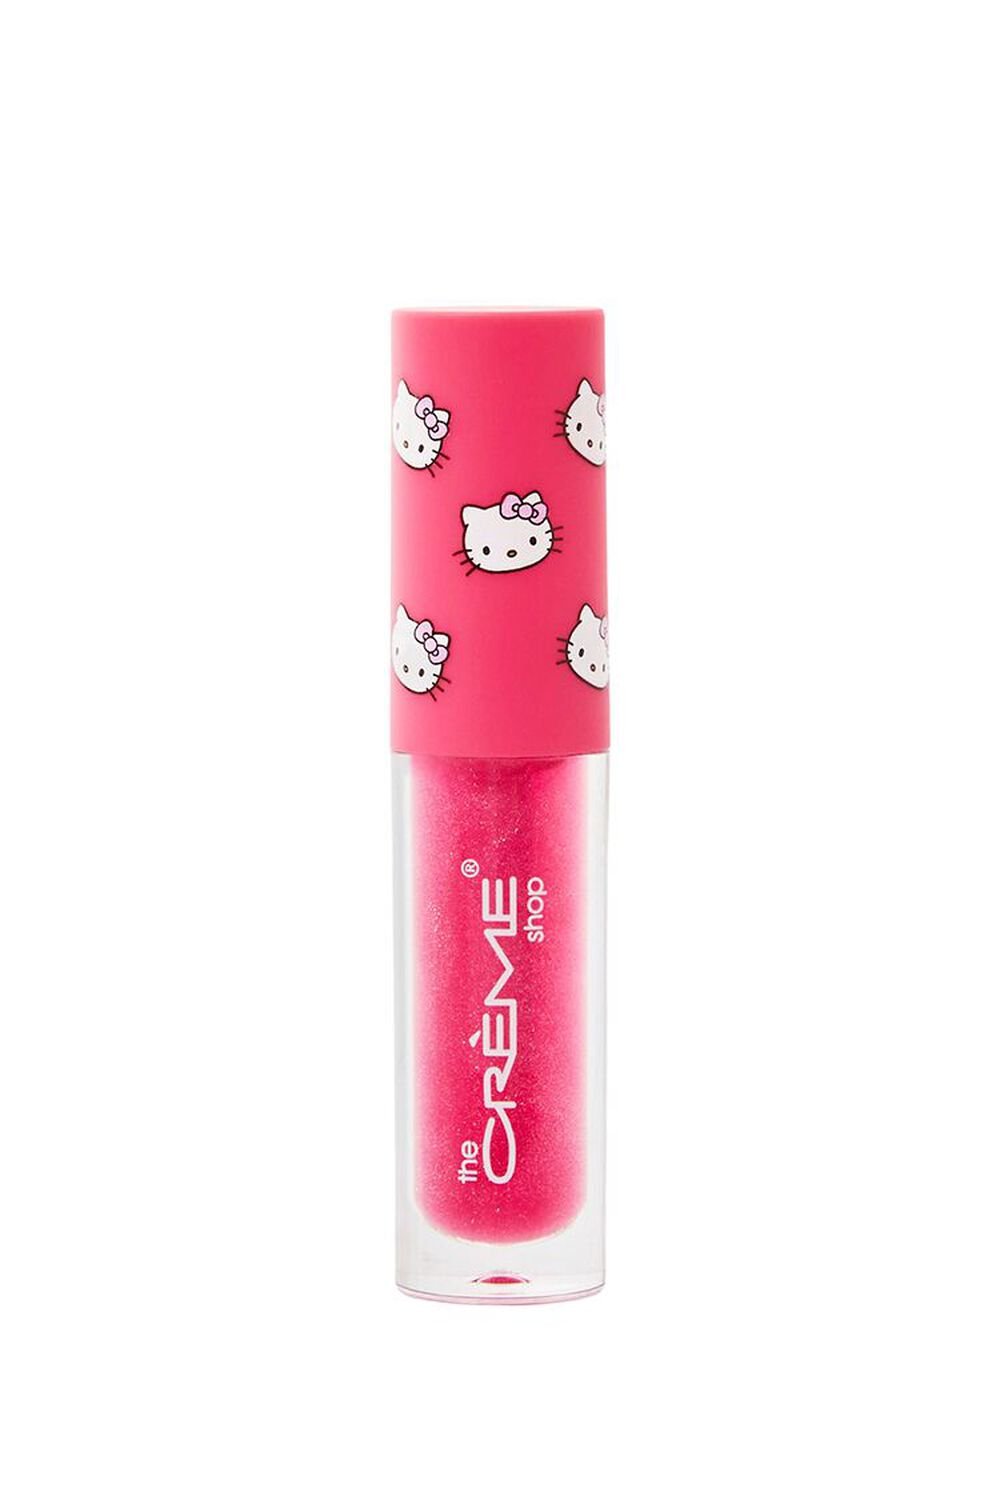 The Crème Shop x Hello Kitty Reusable Gel Eye Masks